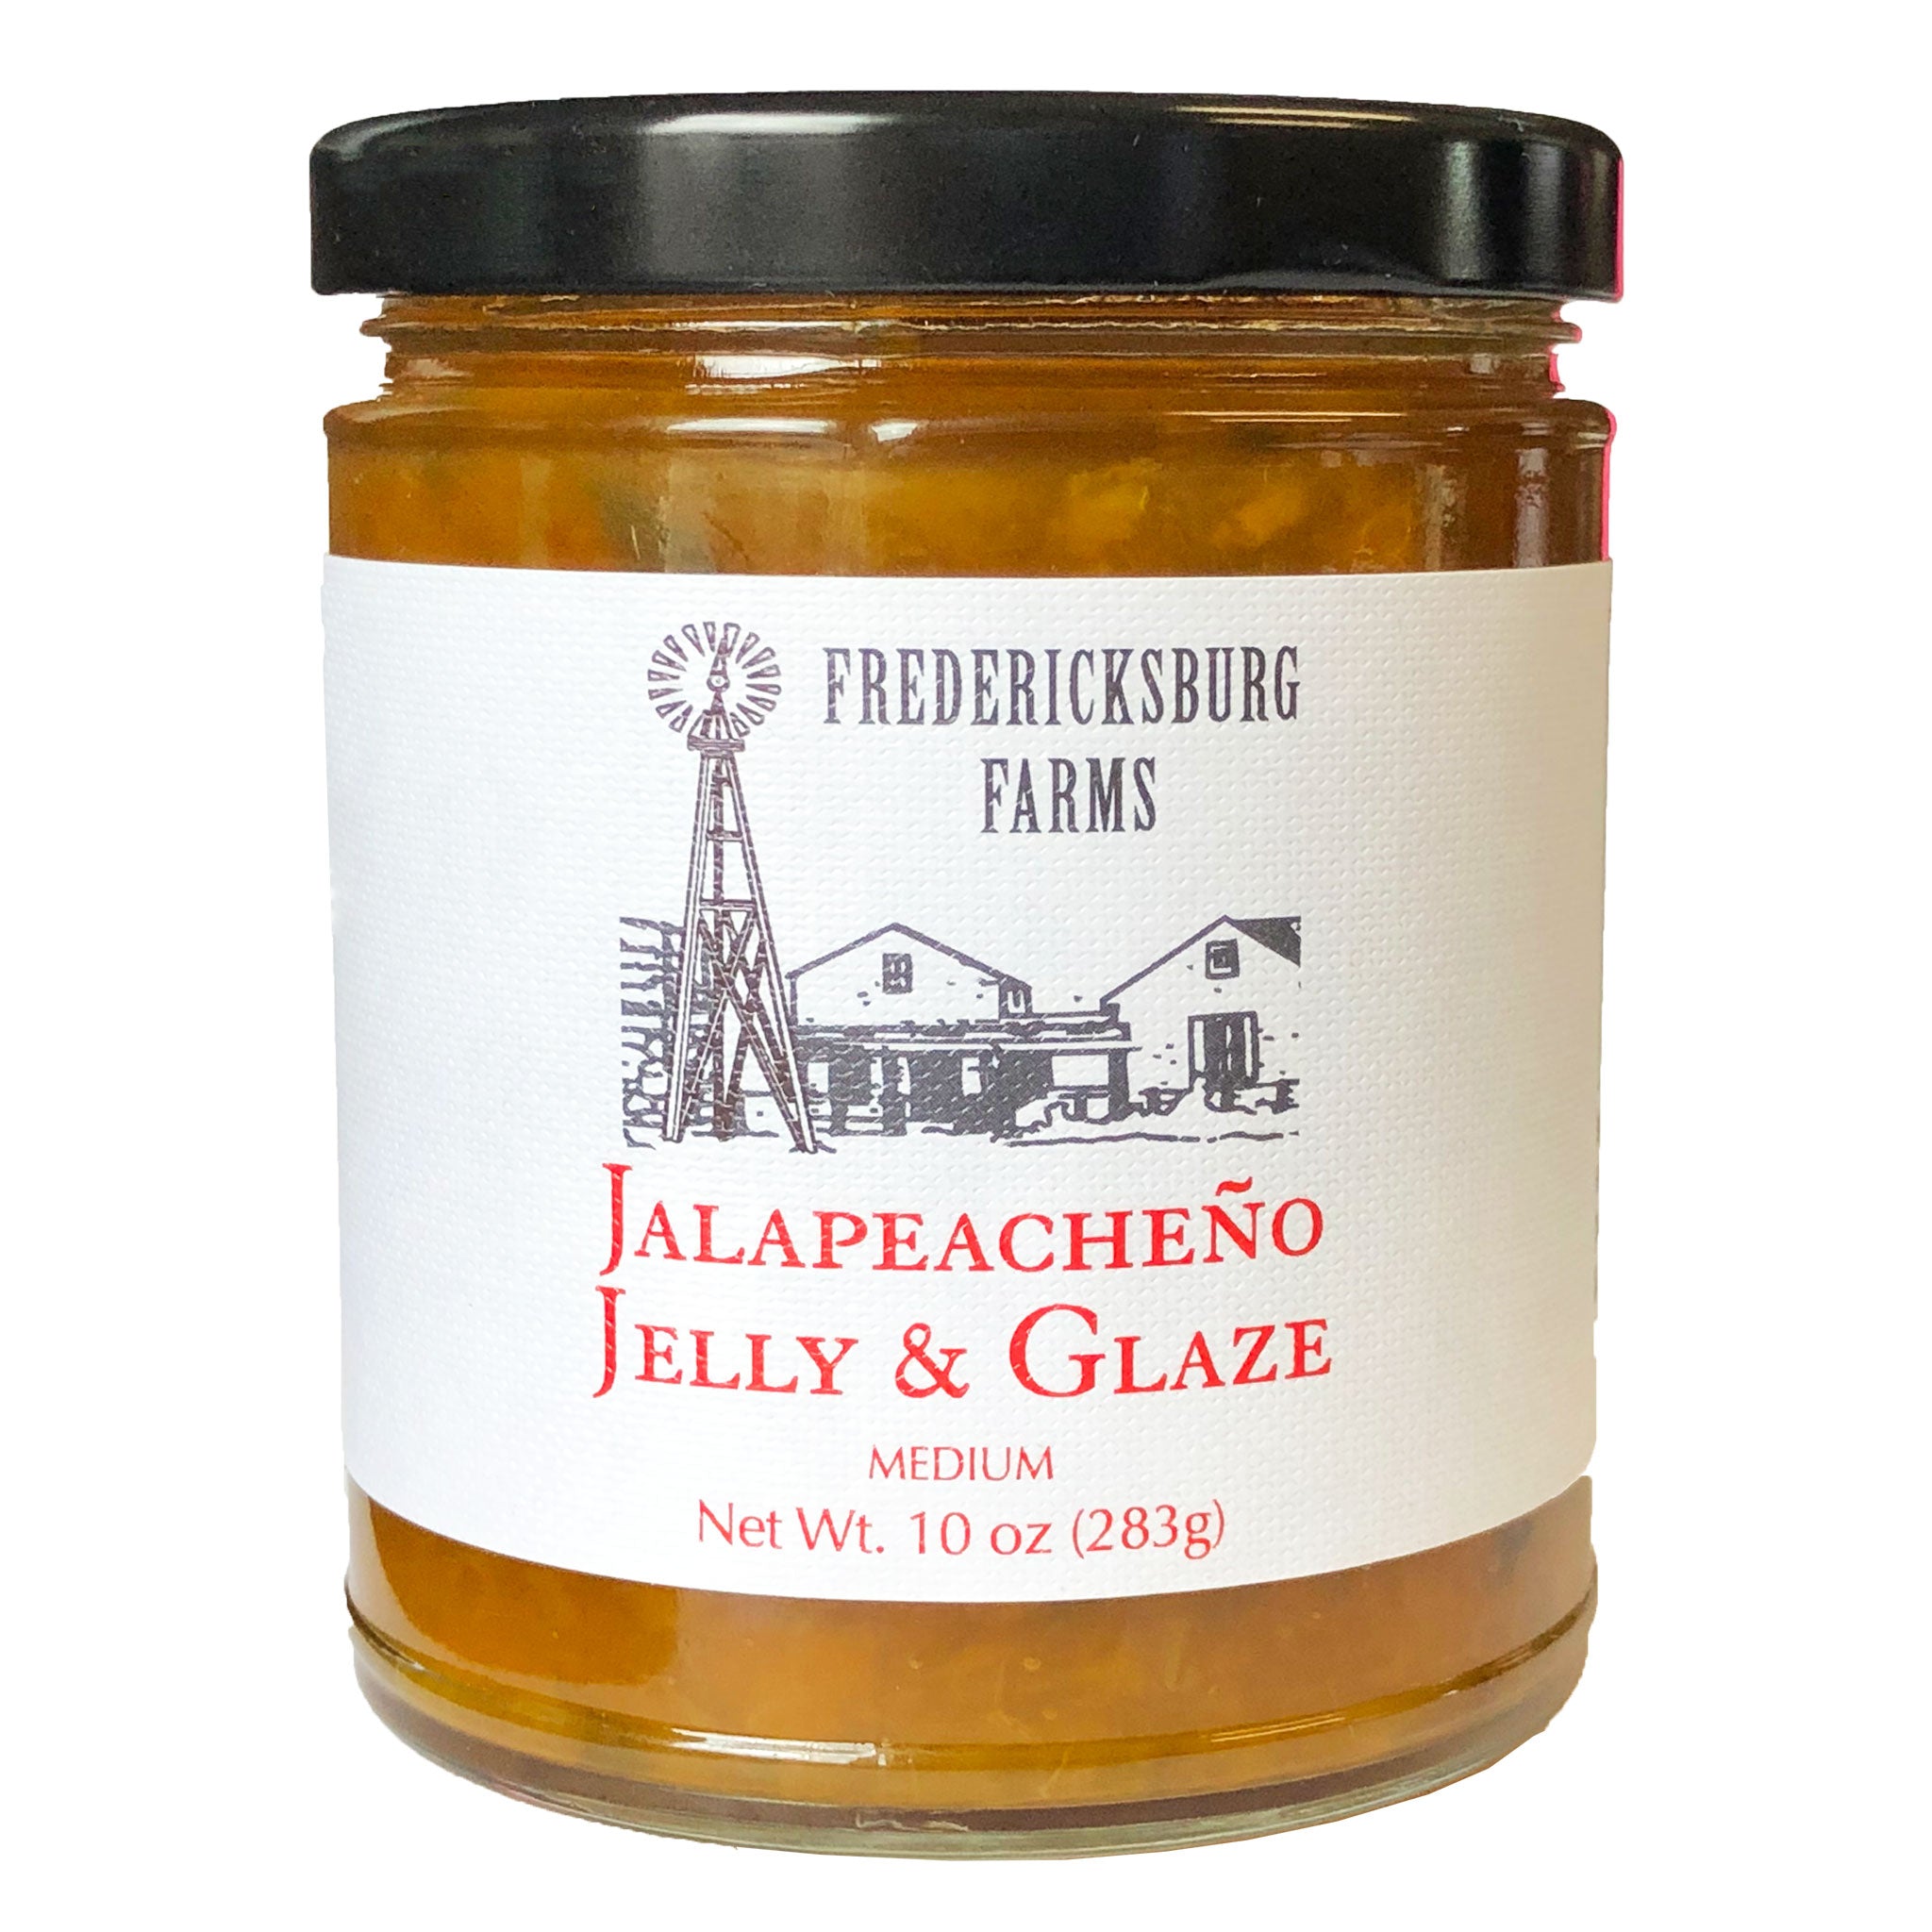 Jalapeacheno Jelly & Glaze - Fredericksburg Farms